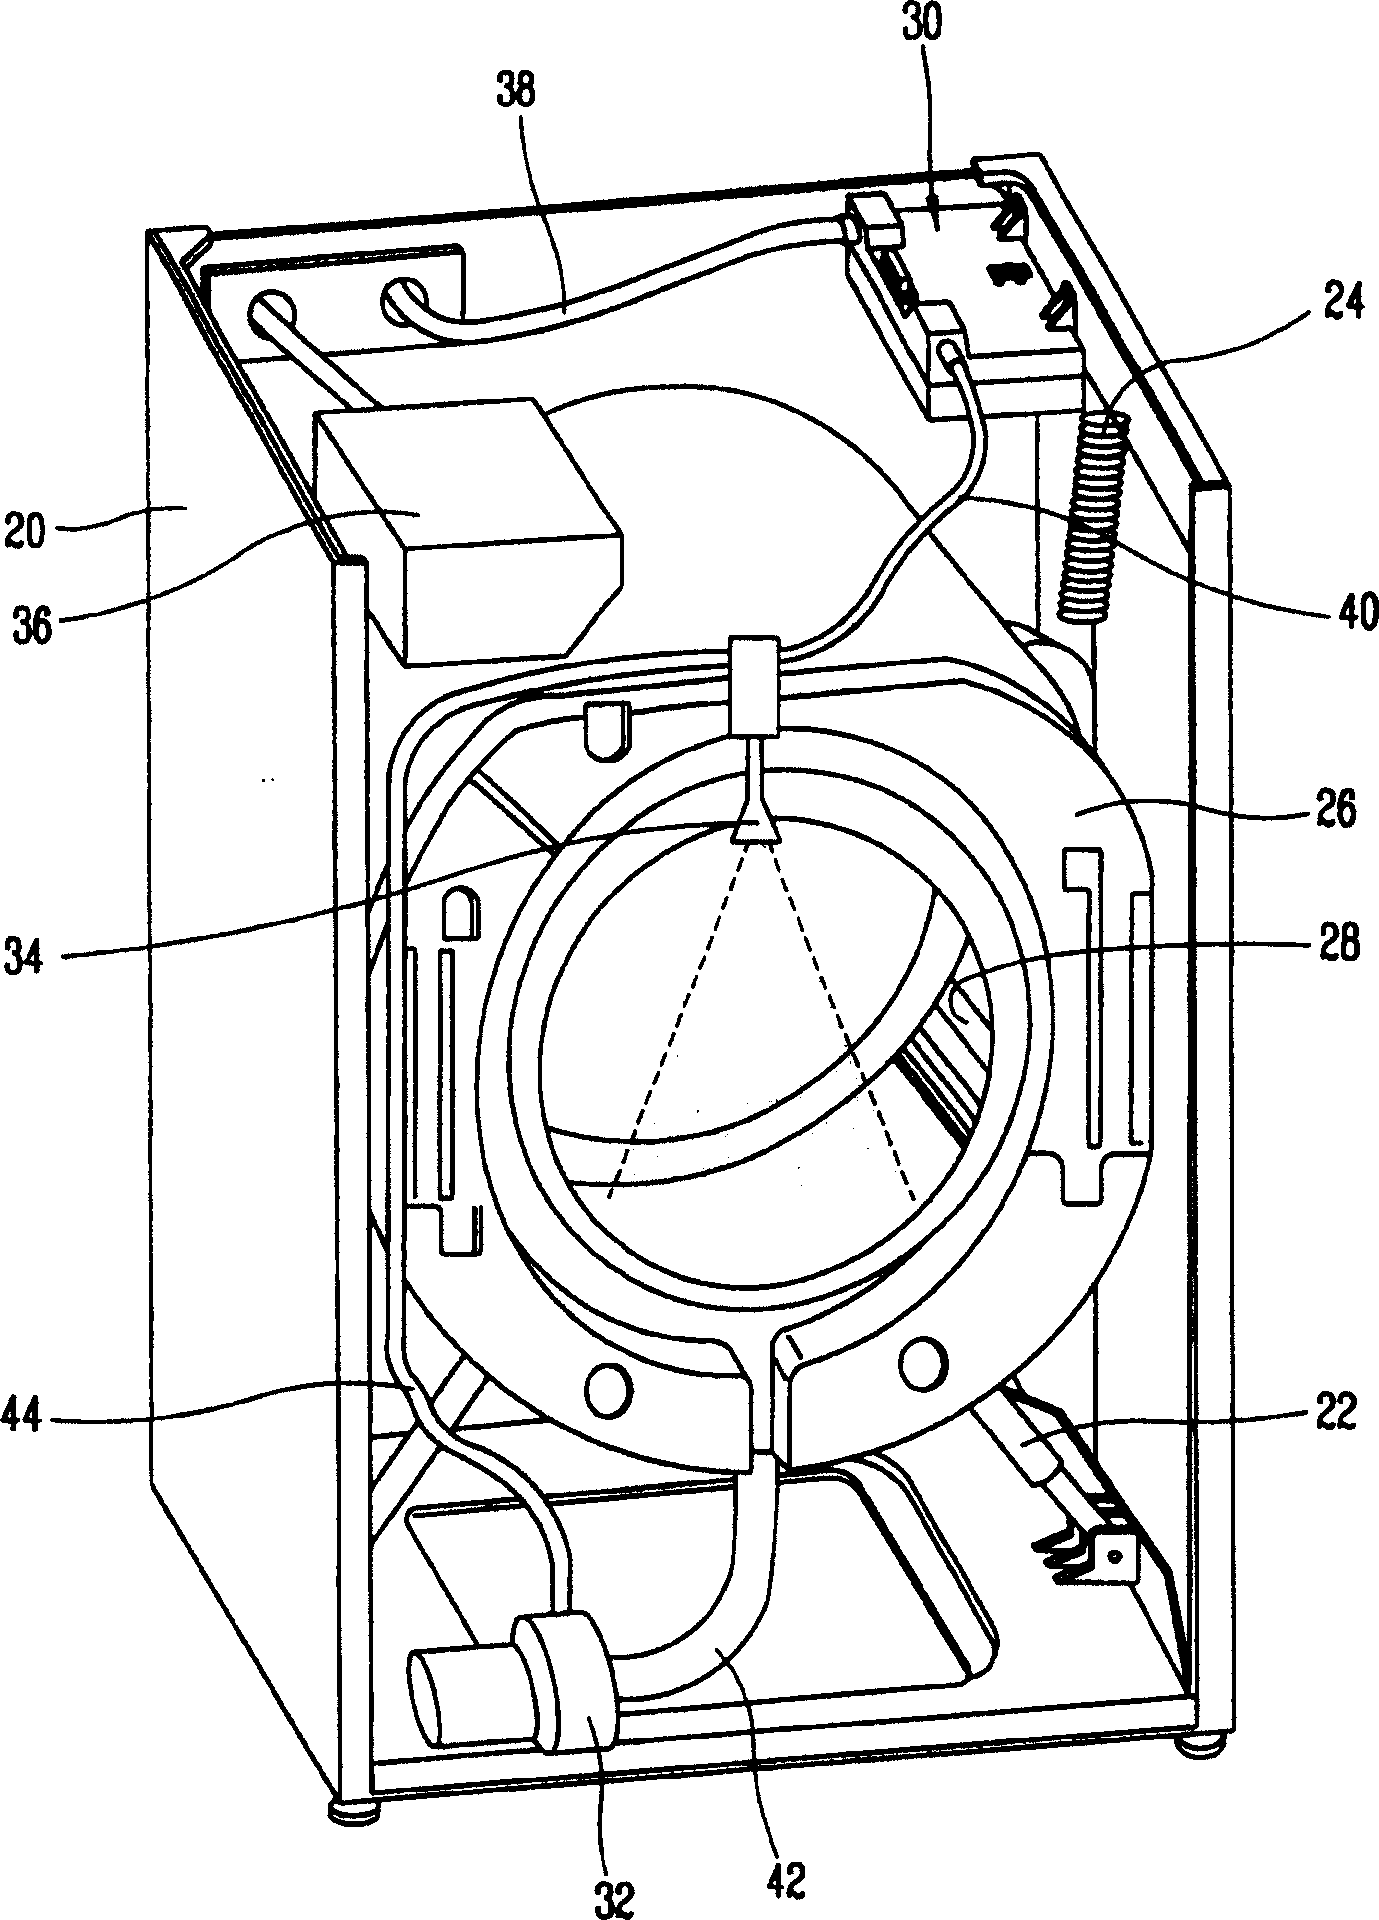 Steam generation apparatus for washing machine